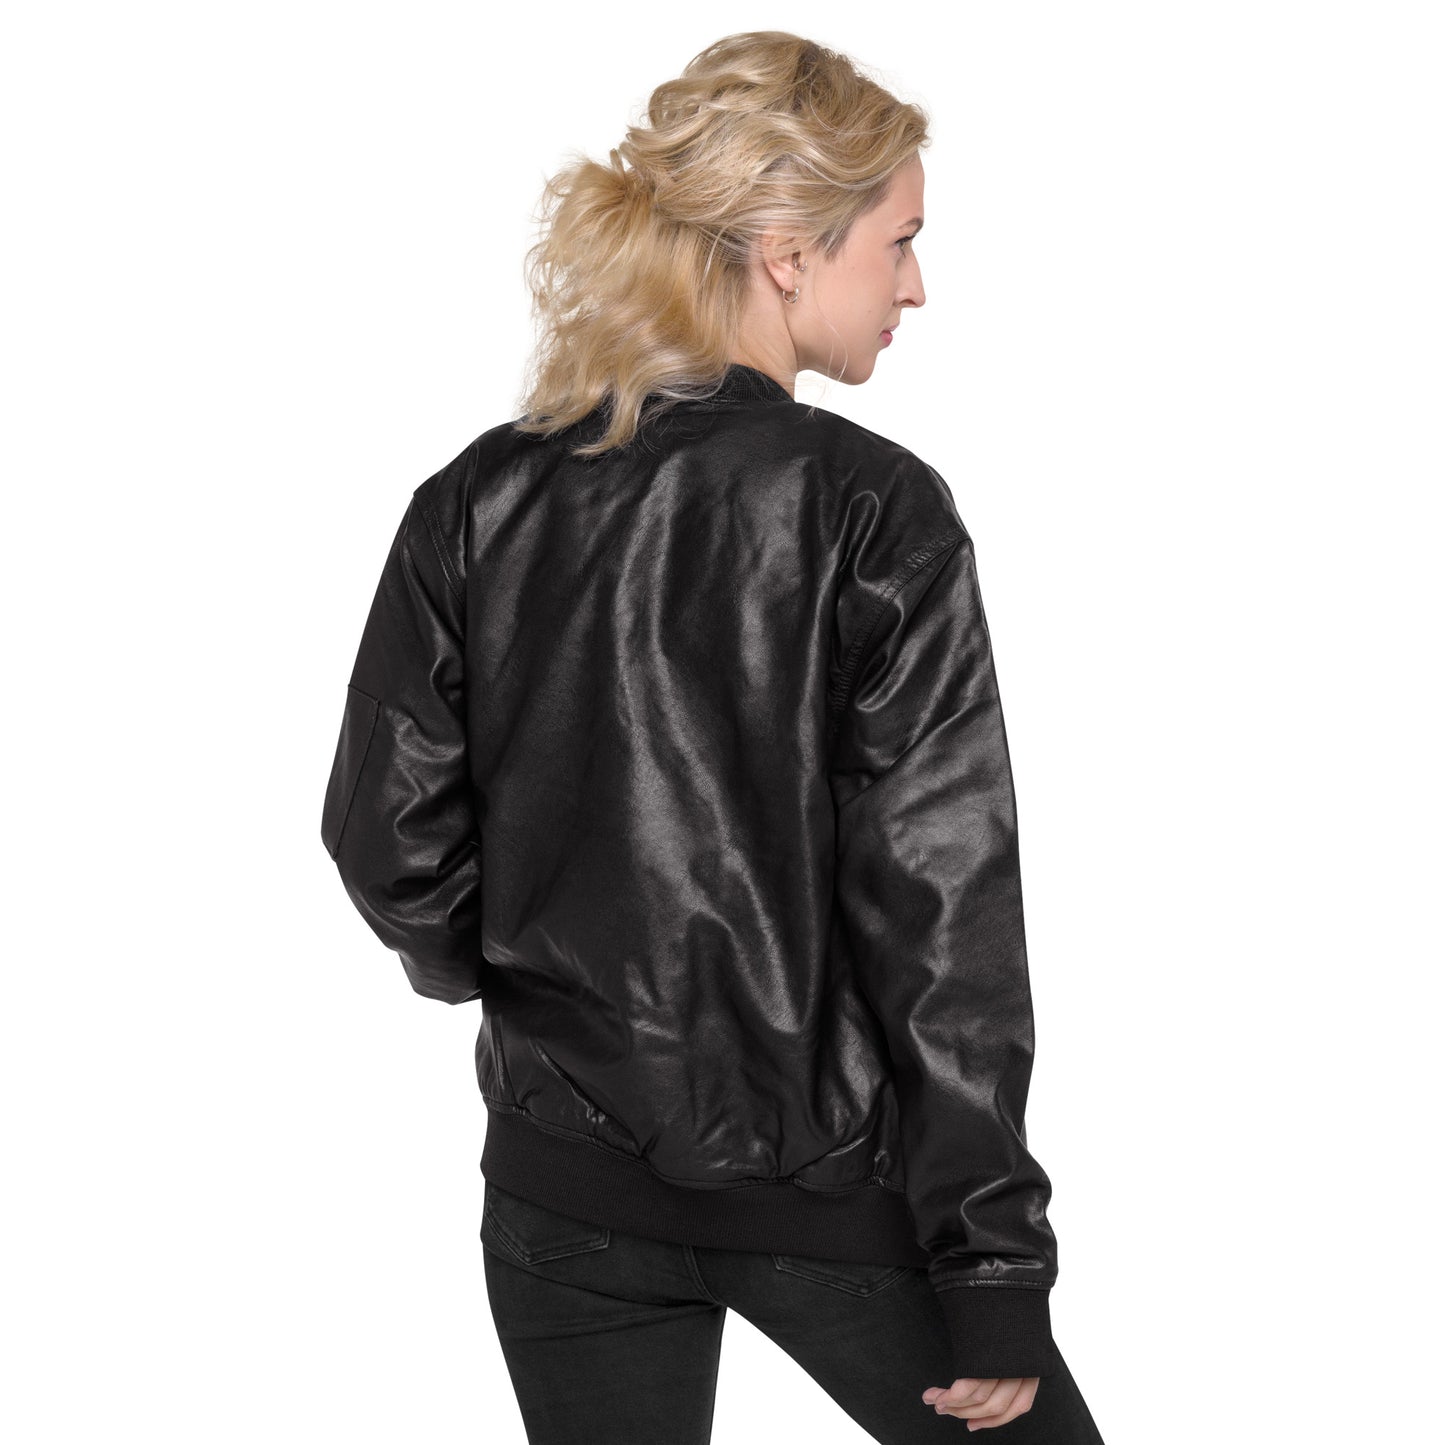 KGZ Leather Bomber Jacket